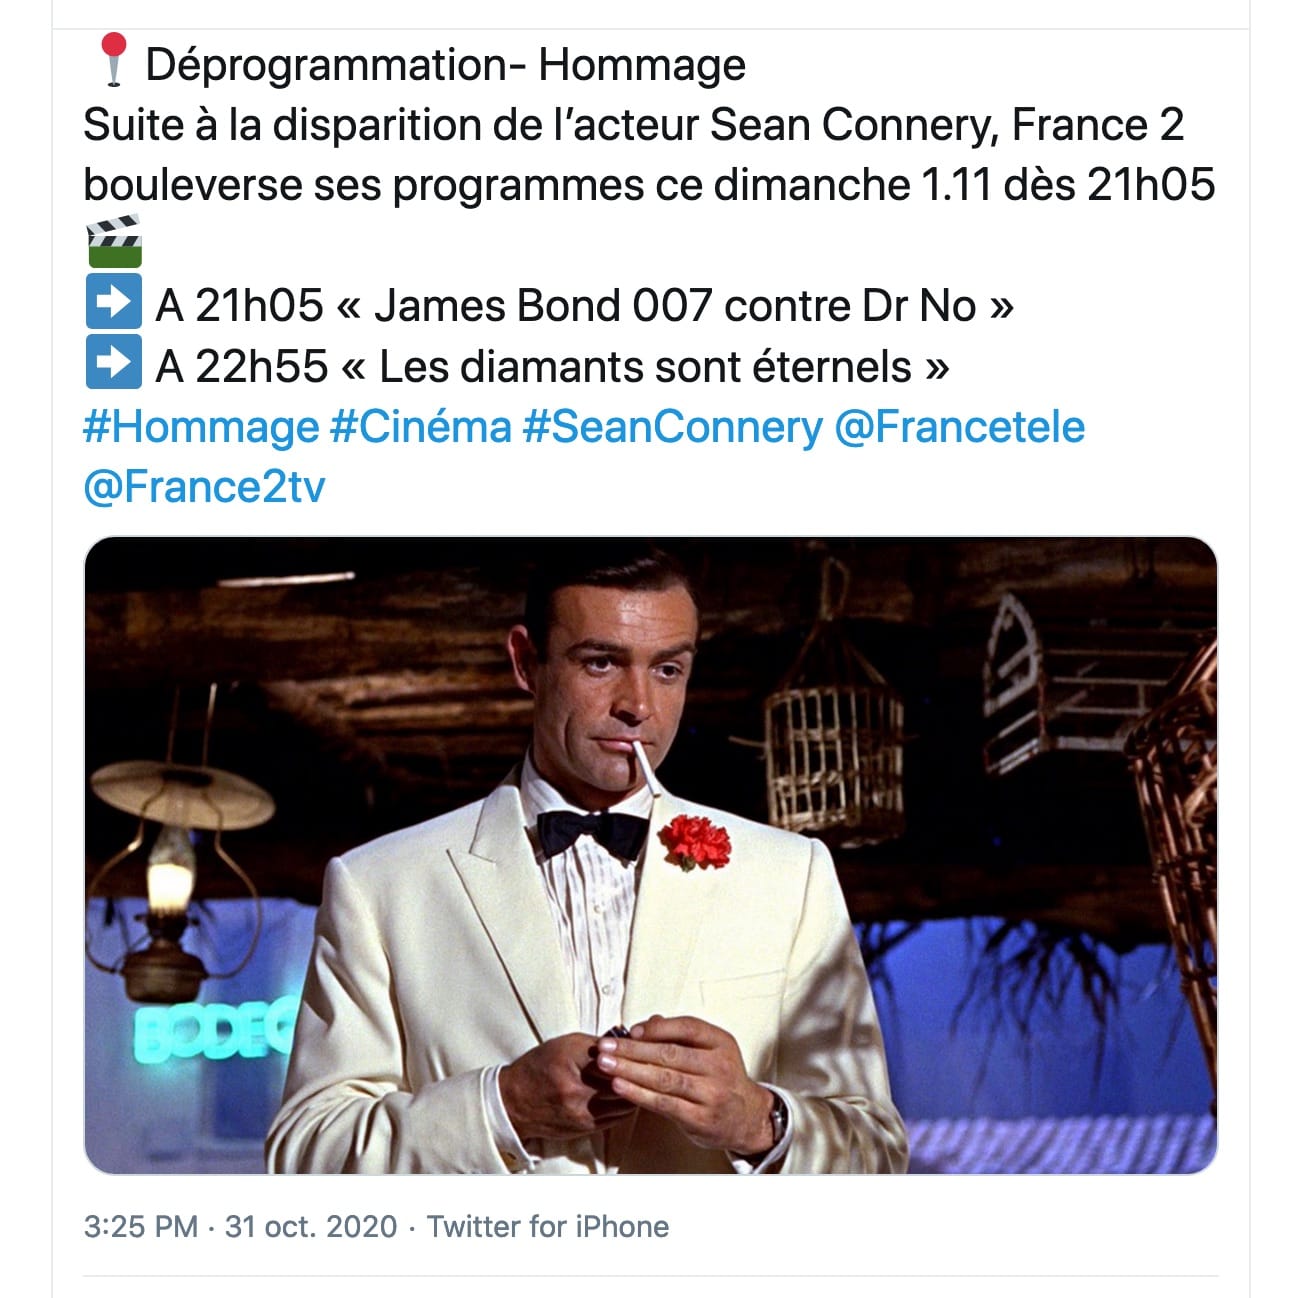 Capture d’écran twitter France 2 hommage Sean Connery